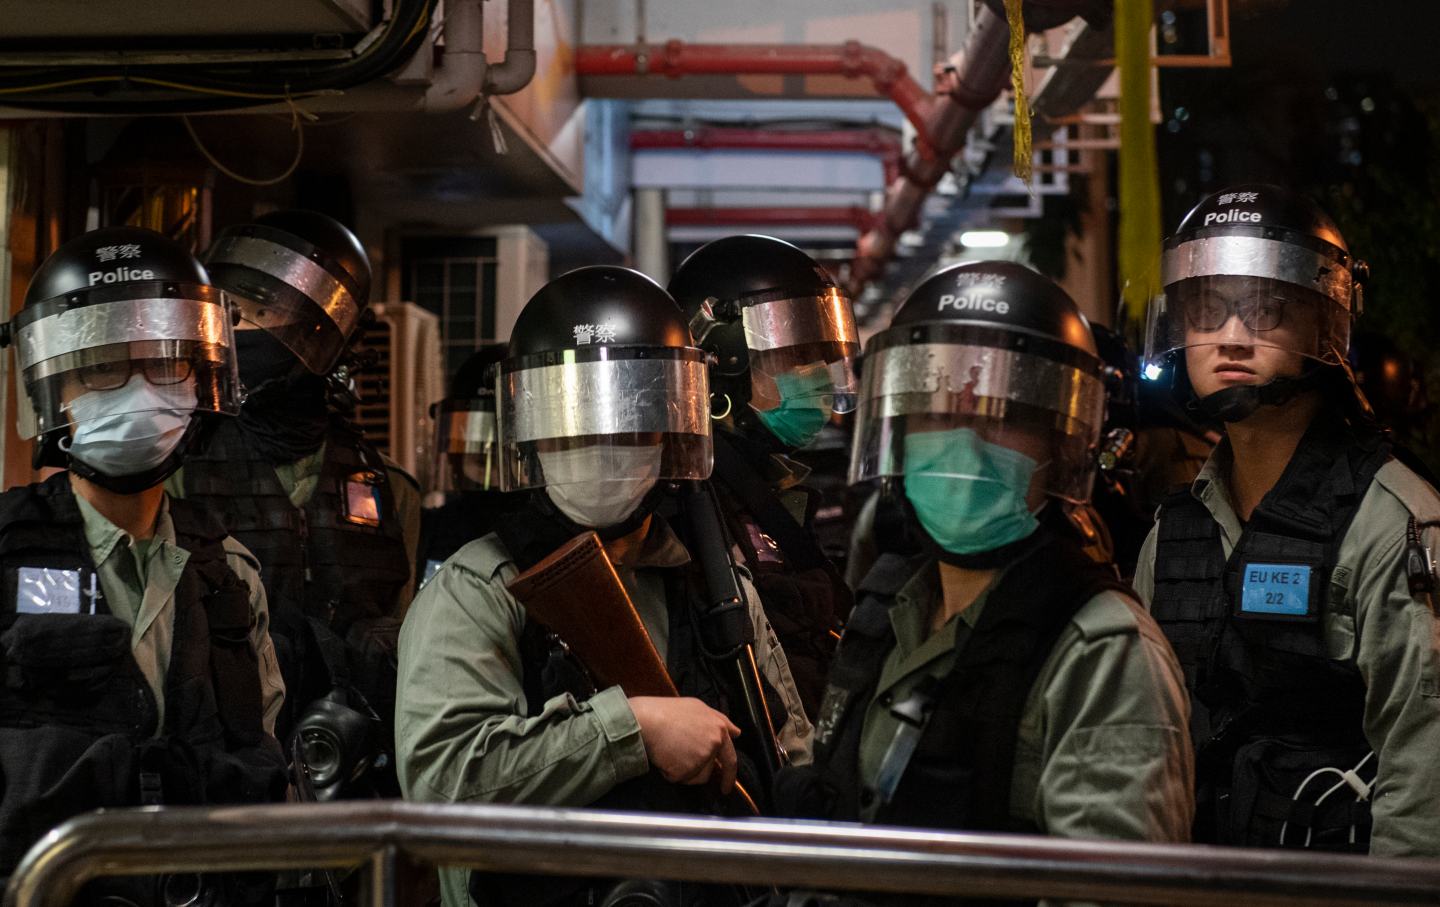 Police officers gathered in Hong Kong during coronavirus pandemic